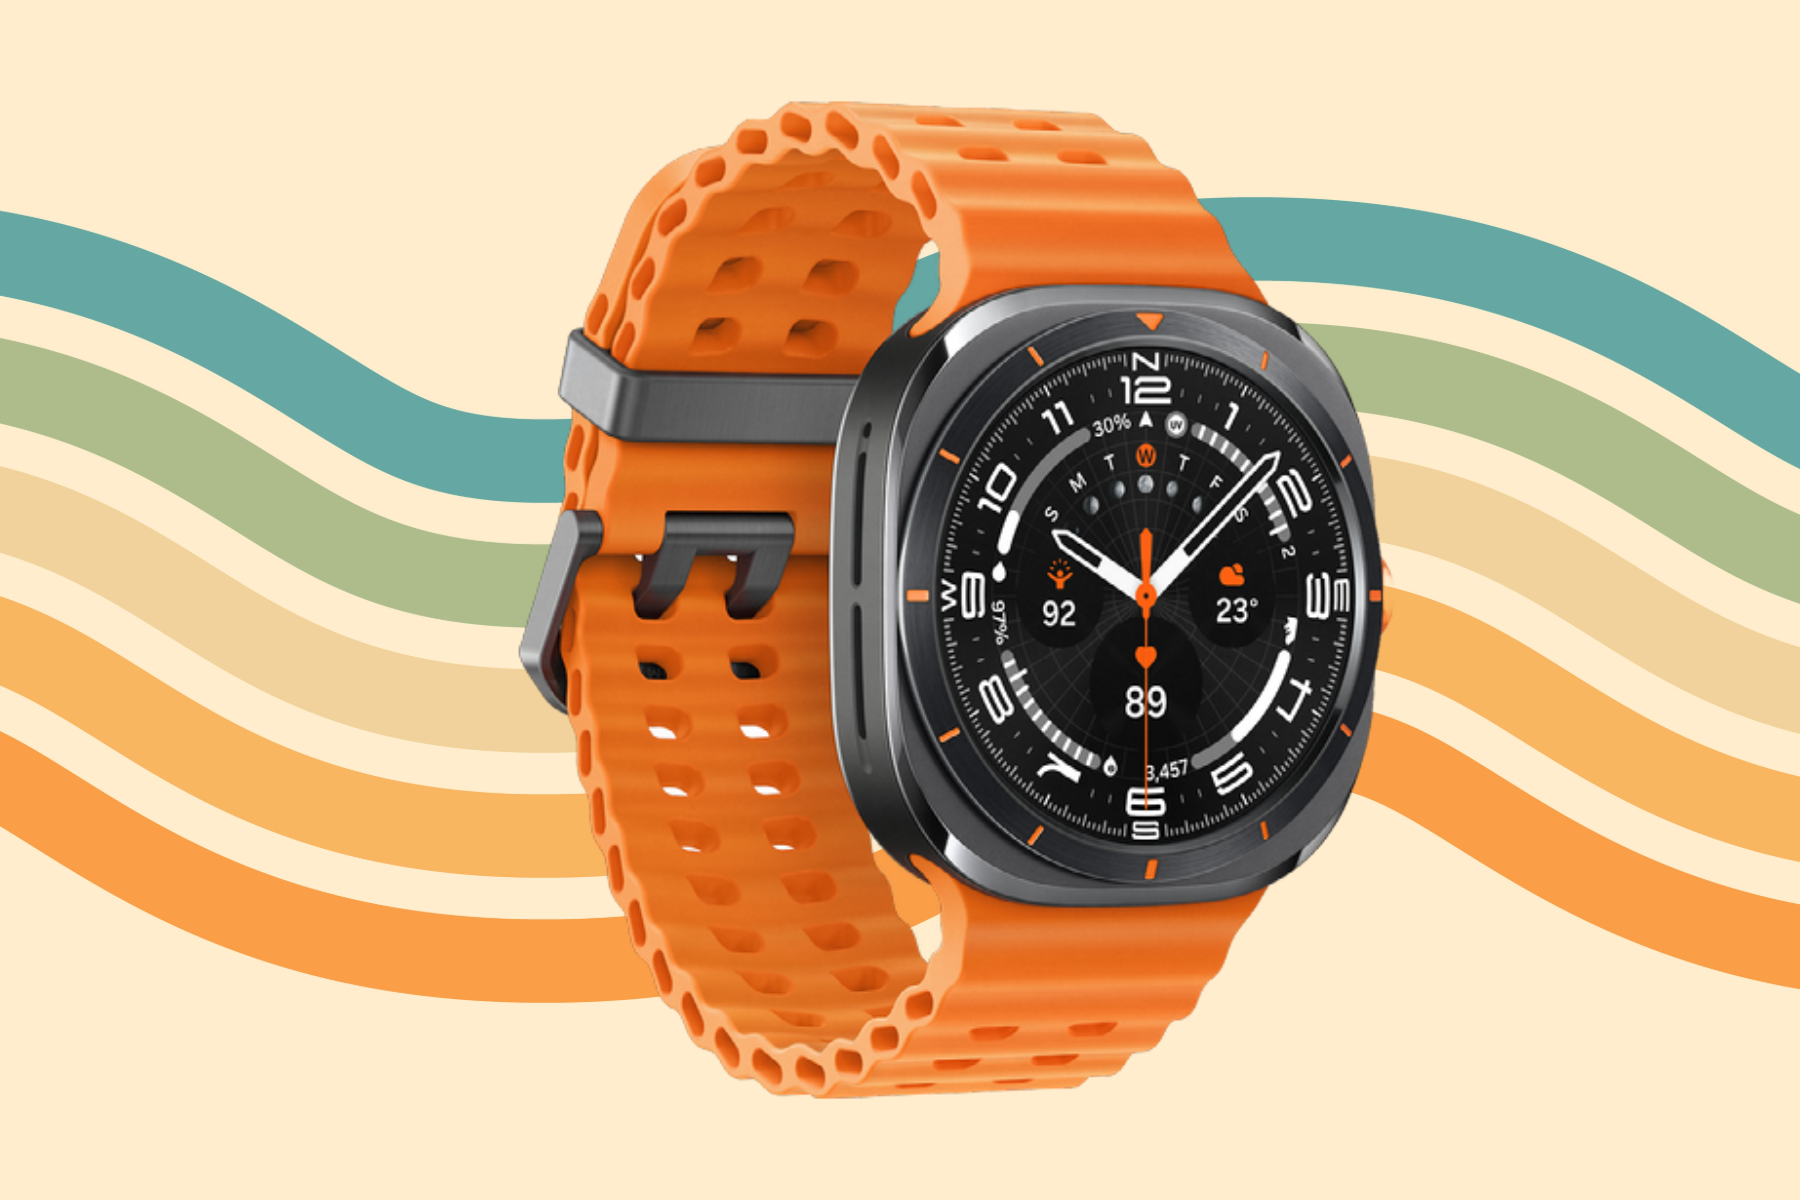 Samsung Galaxy Watch Ultra in orange color.